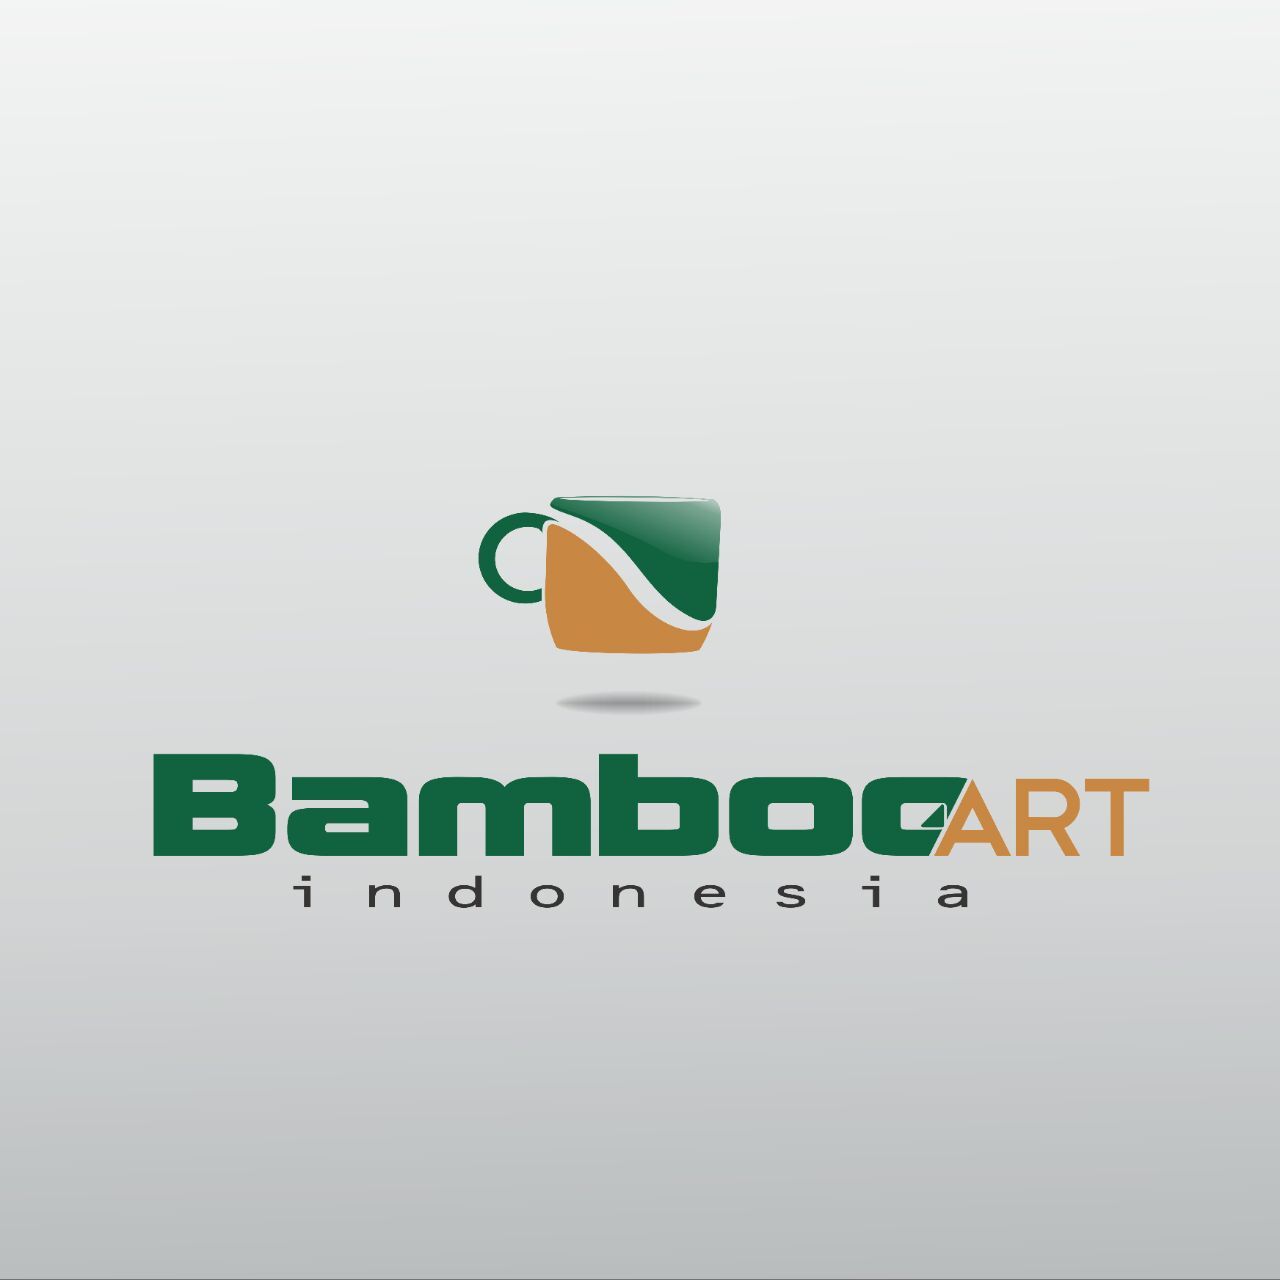 Bamboo Art Indonesia logo